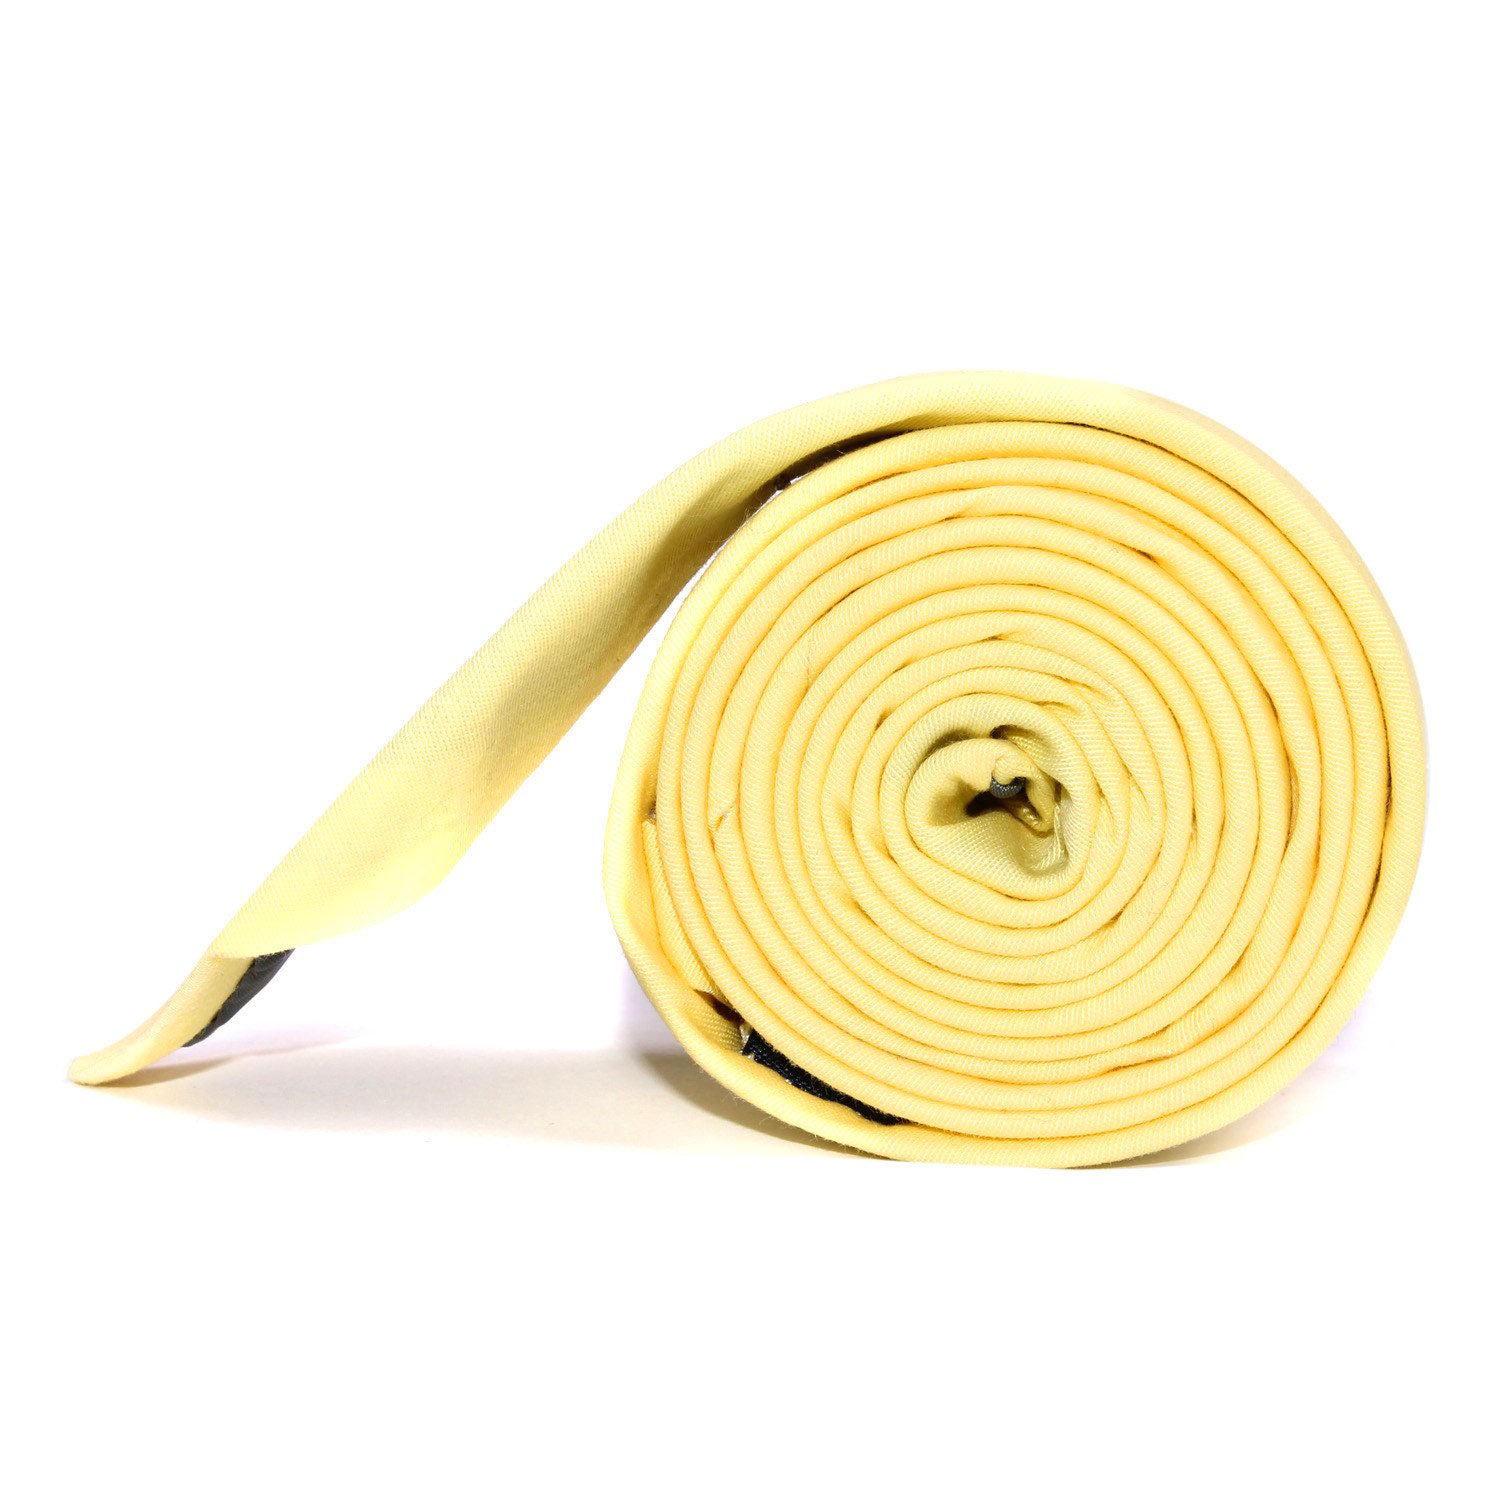 Pastel Yellow Cotton Skinny Tie